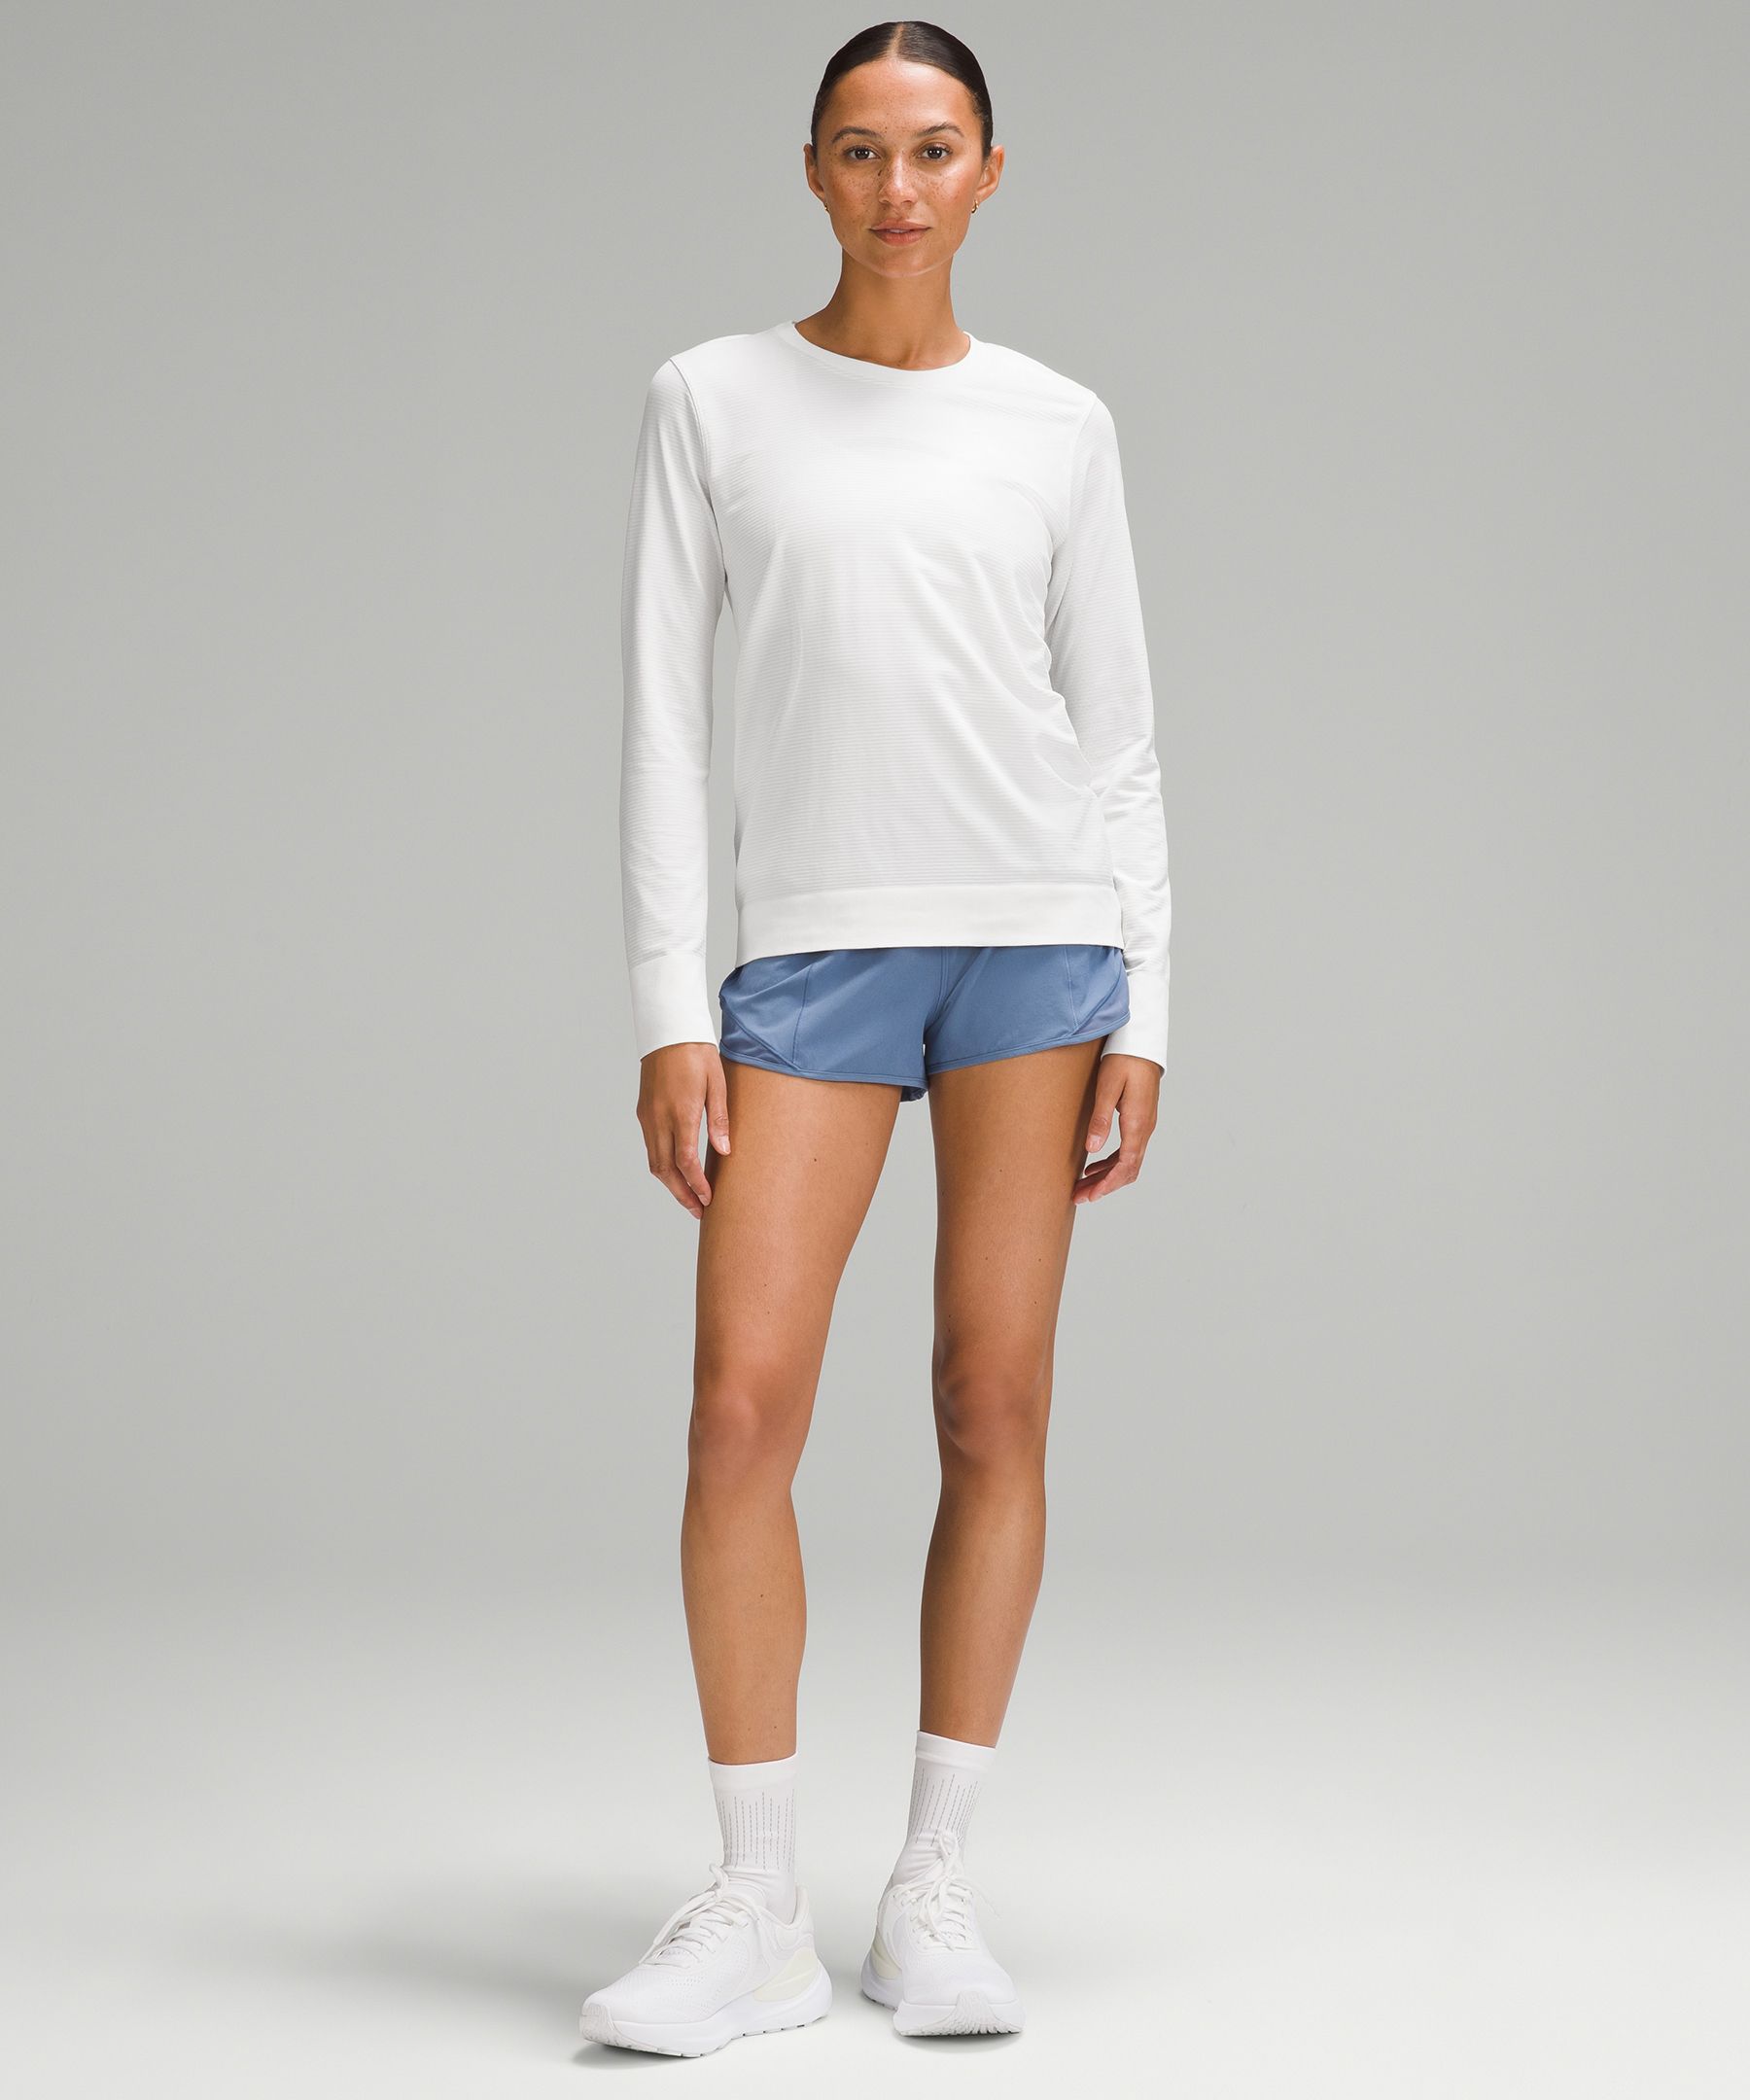 White OTS Top - Long Sleeve Top - OTS Long Sleeve Shirt - Lulus